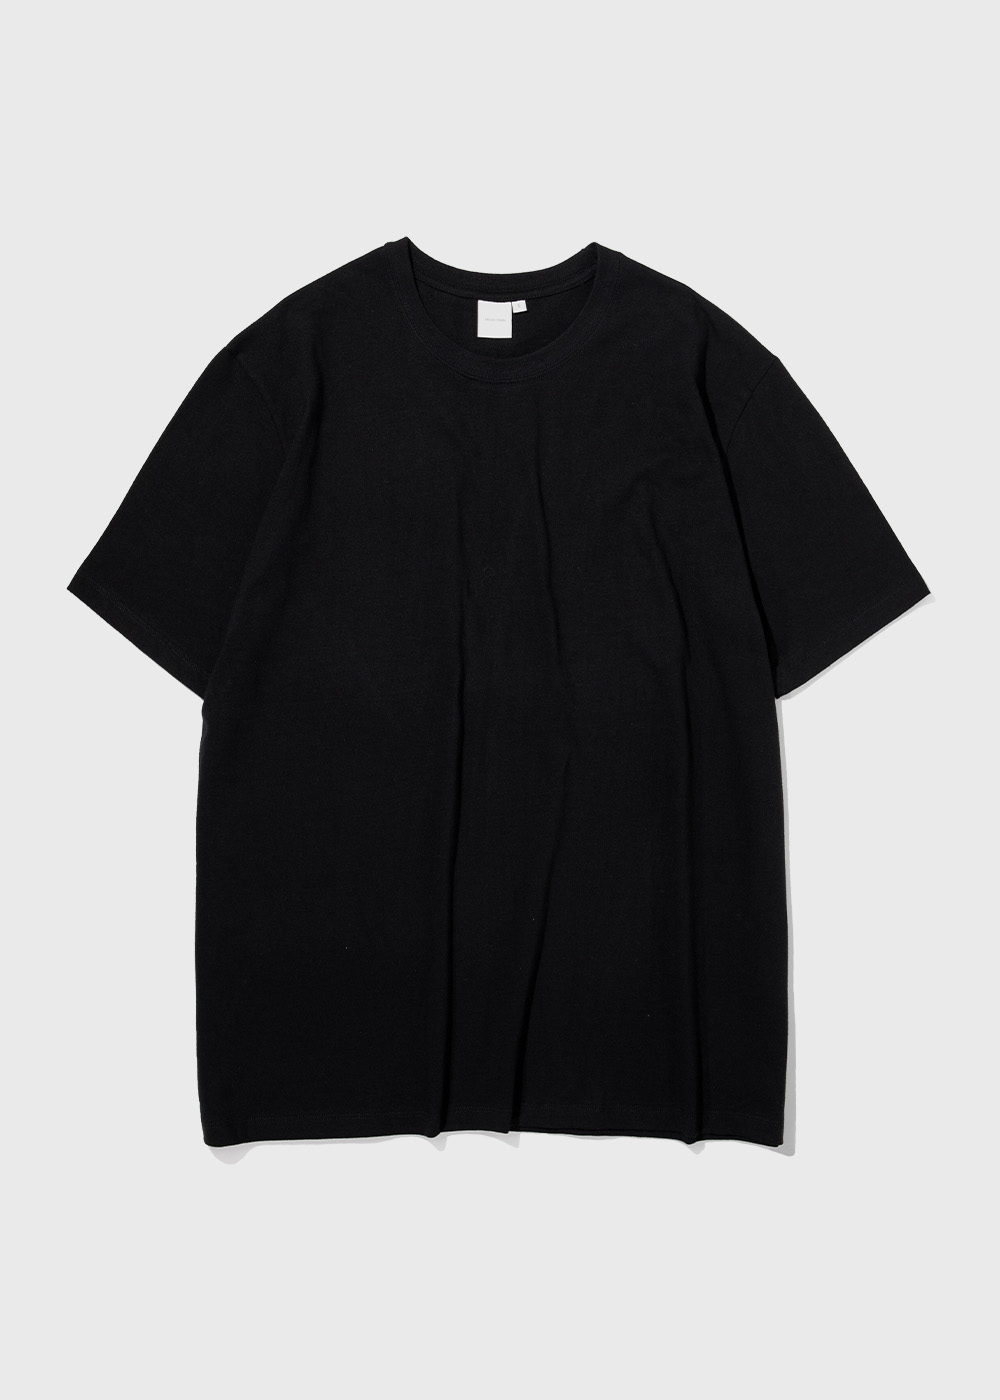 C. Tumbled Combed Cotton 100% 20/1 Single T-shirt _ black